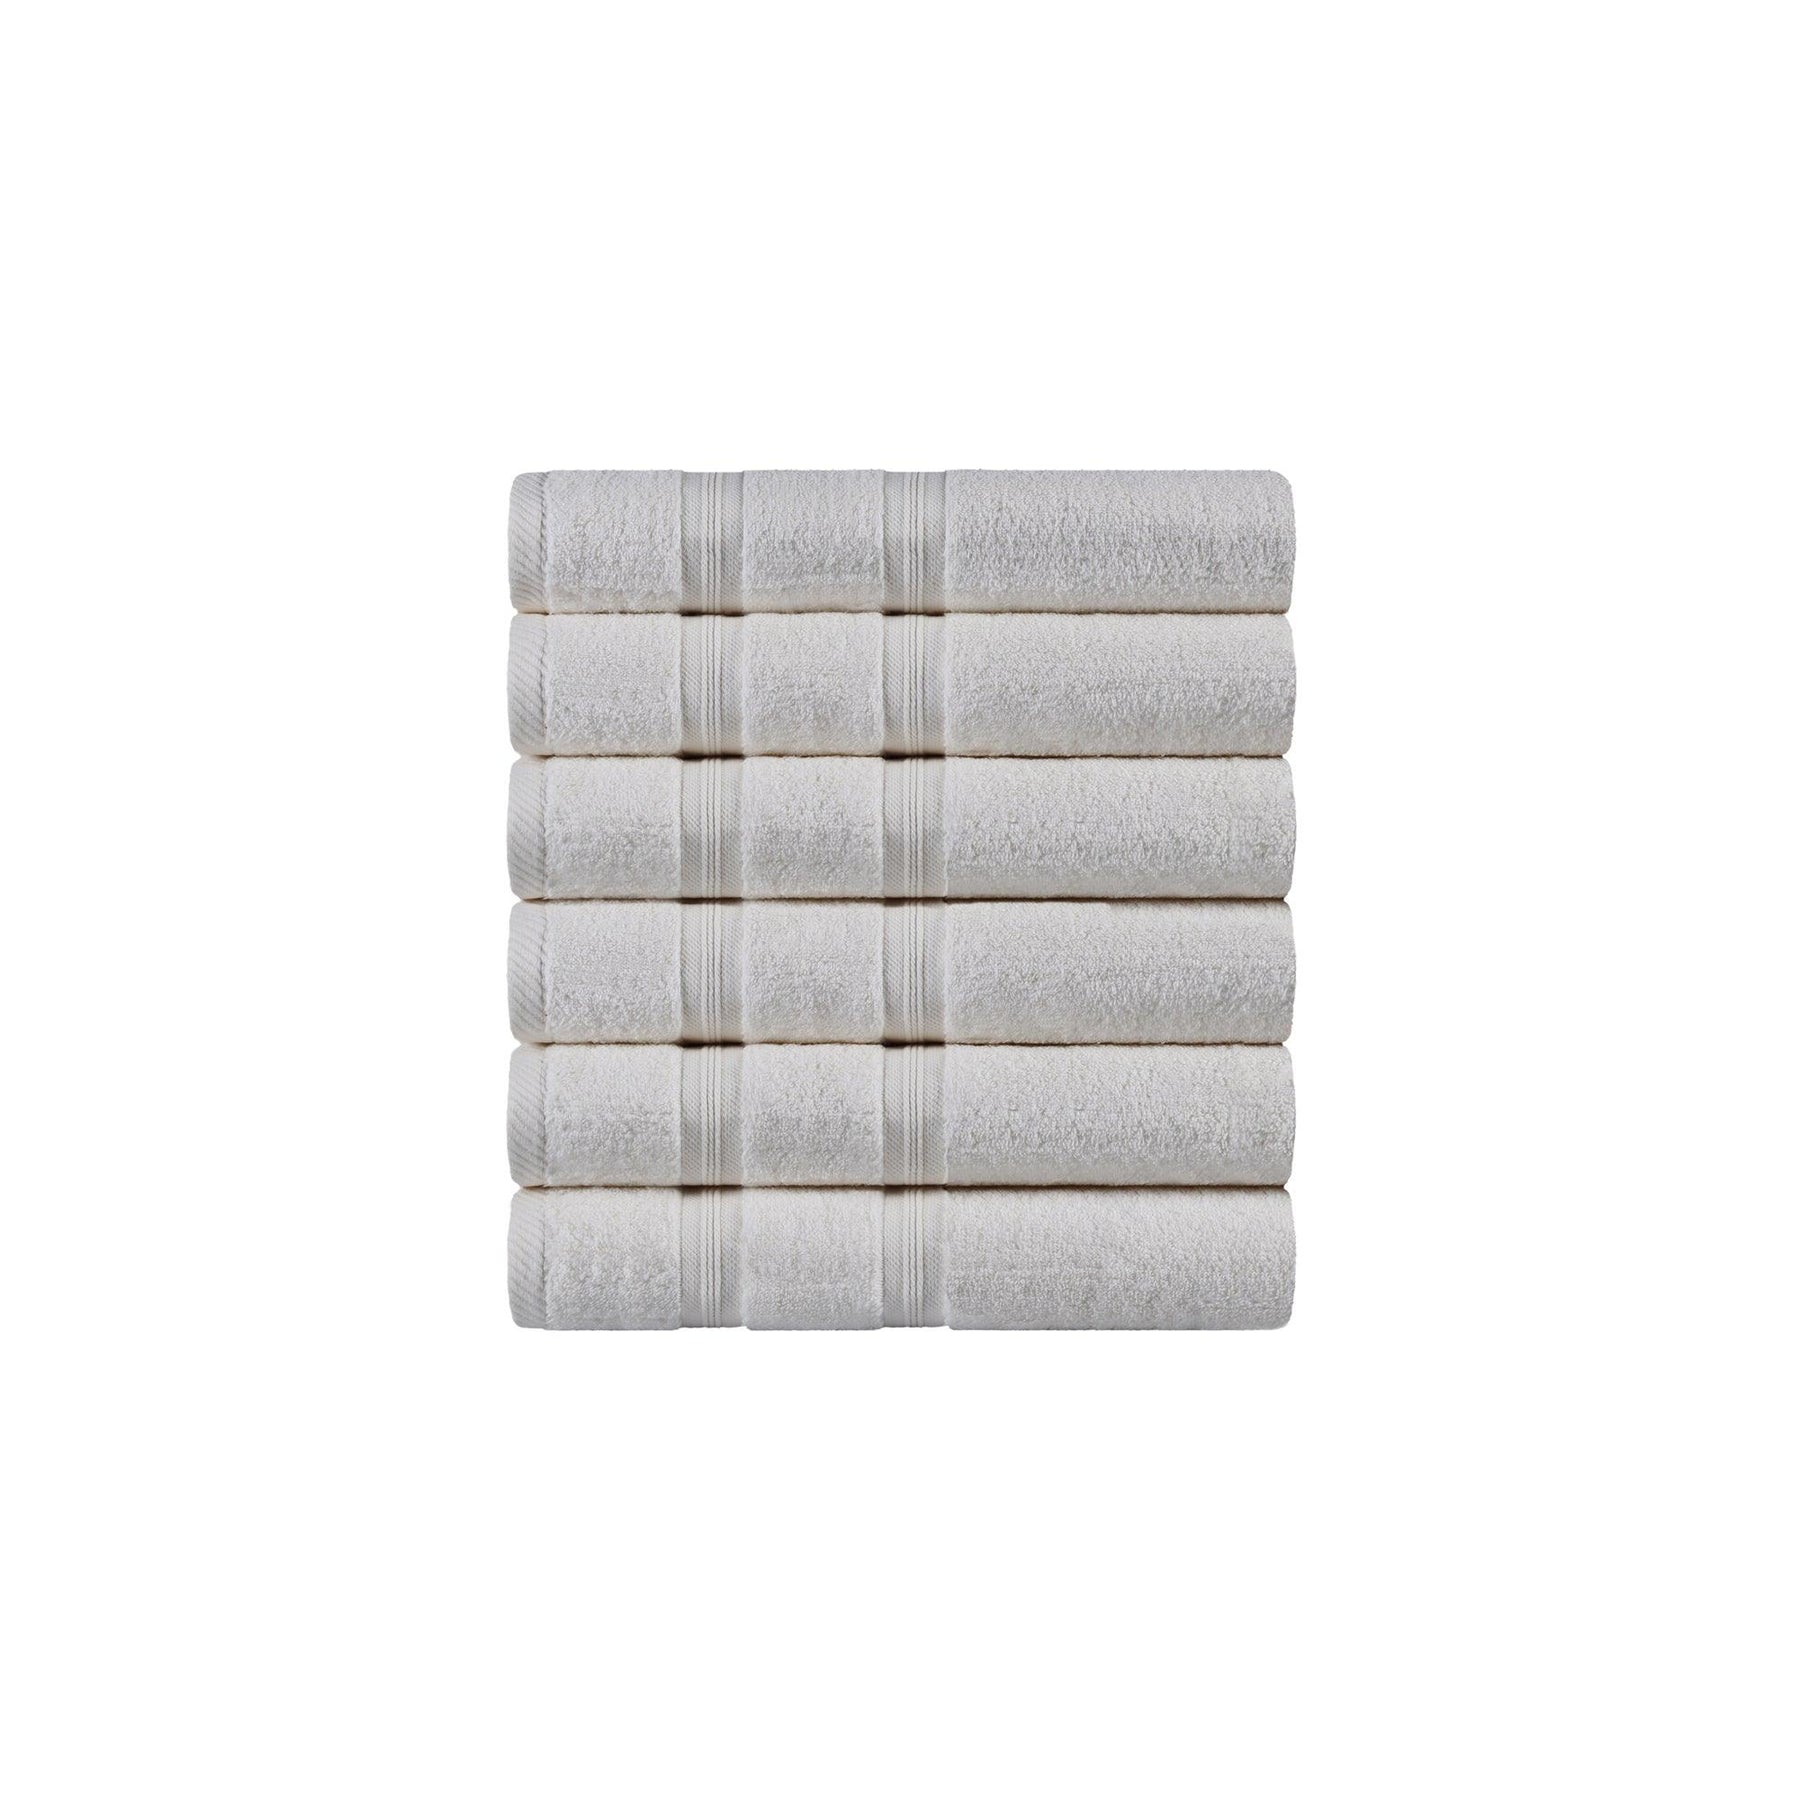 Superior Smart Dry Zero Twist Cotton 6-Piece Hand Towel Set - Ivory